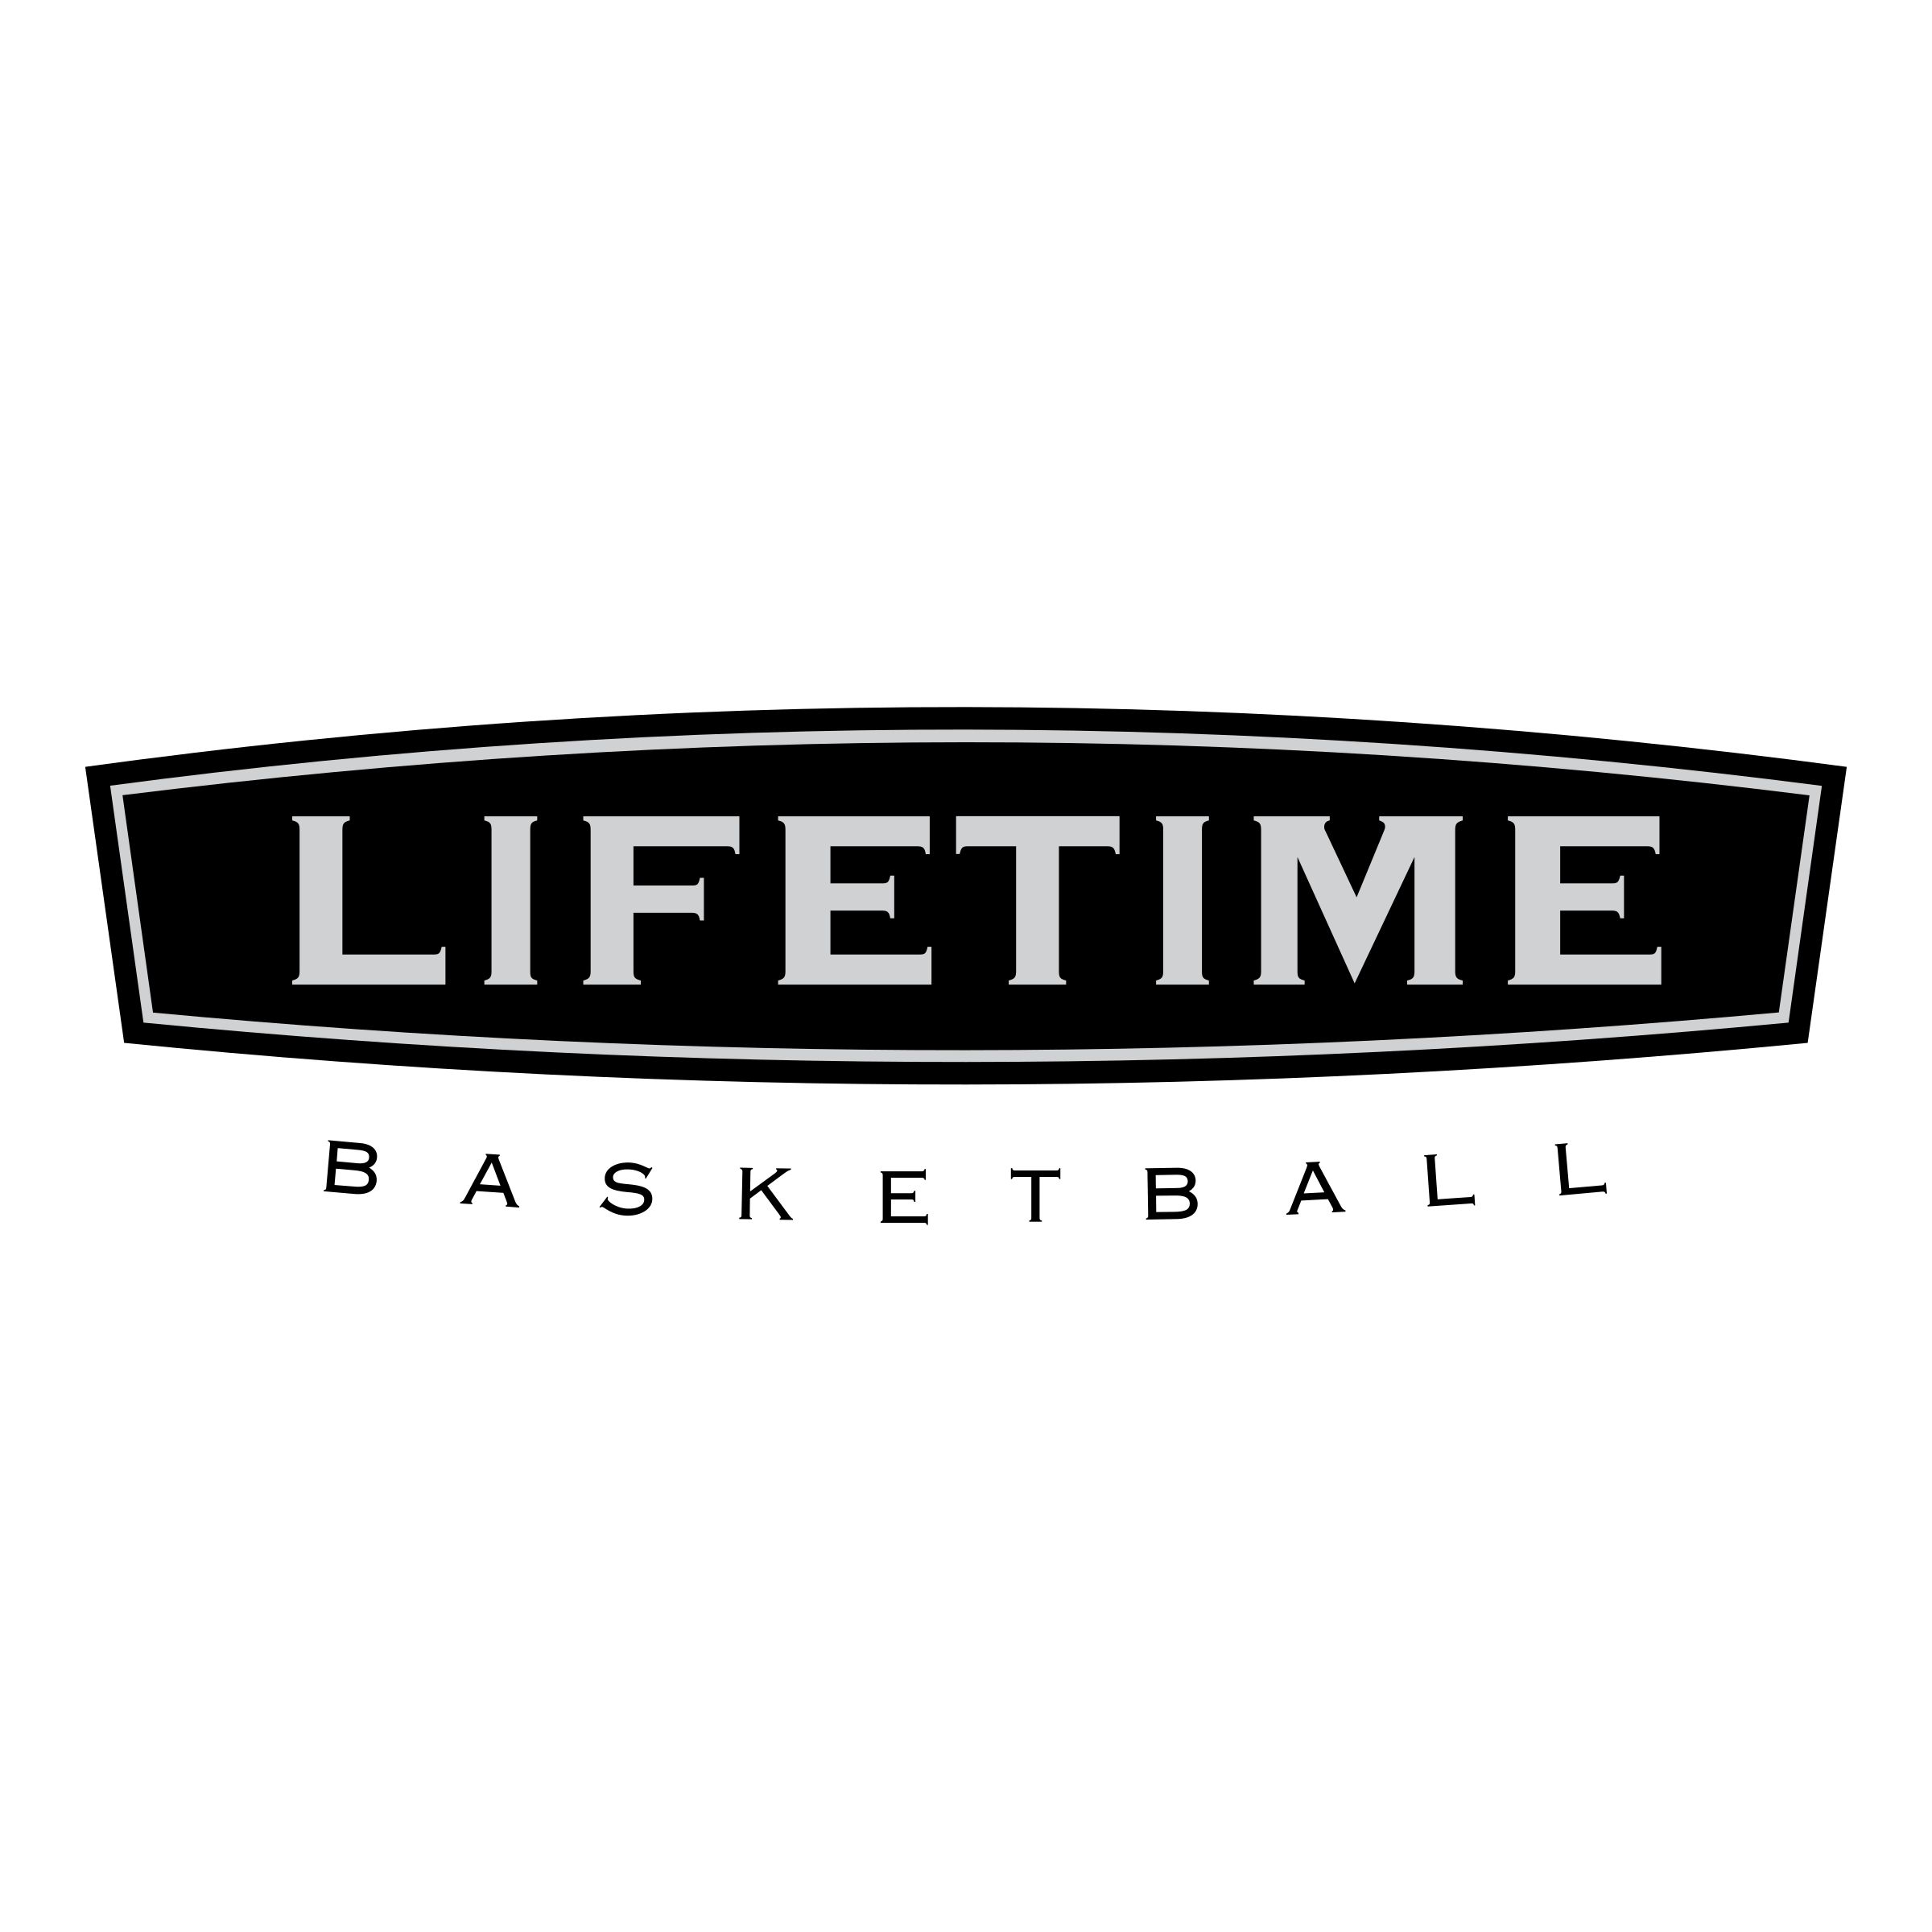 Transparent Basketball Logo - Lifetime Basketball Logo PNG Transparent & SVG Vector - Freebie Supply